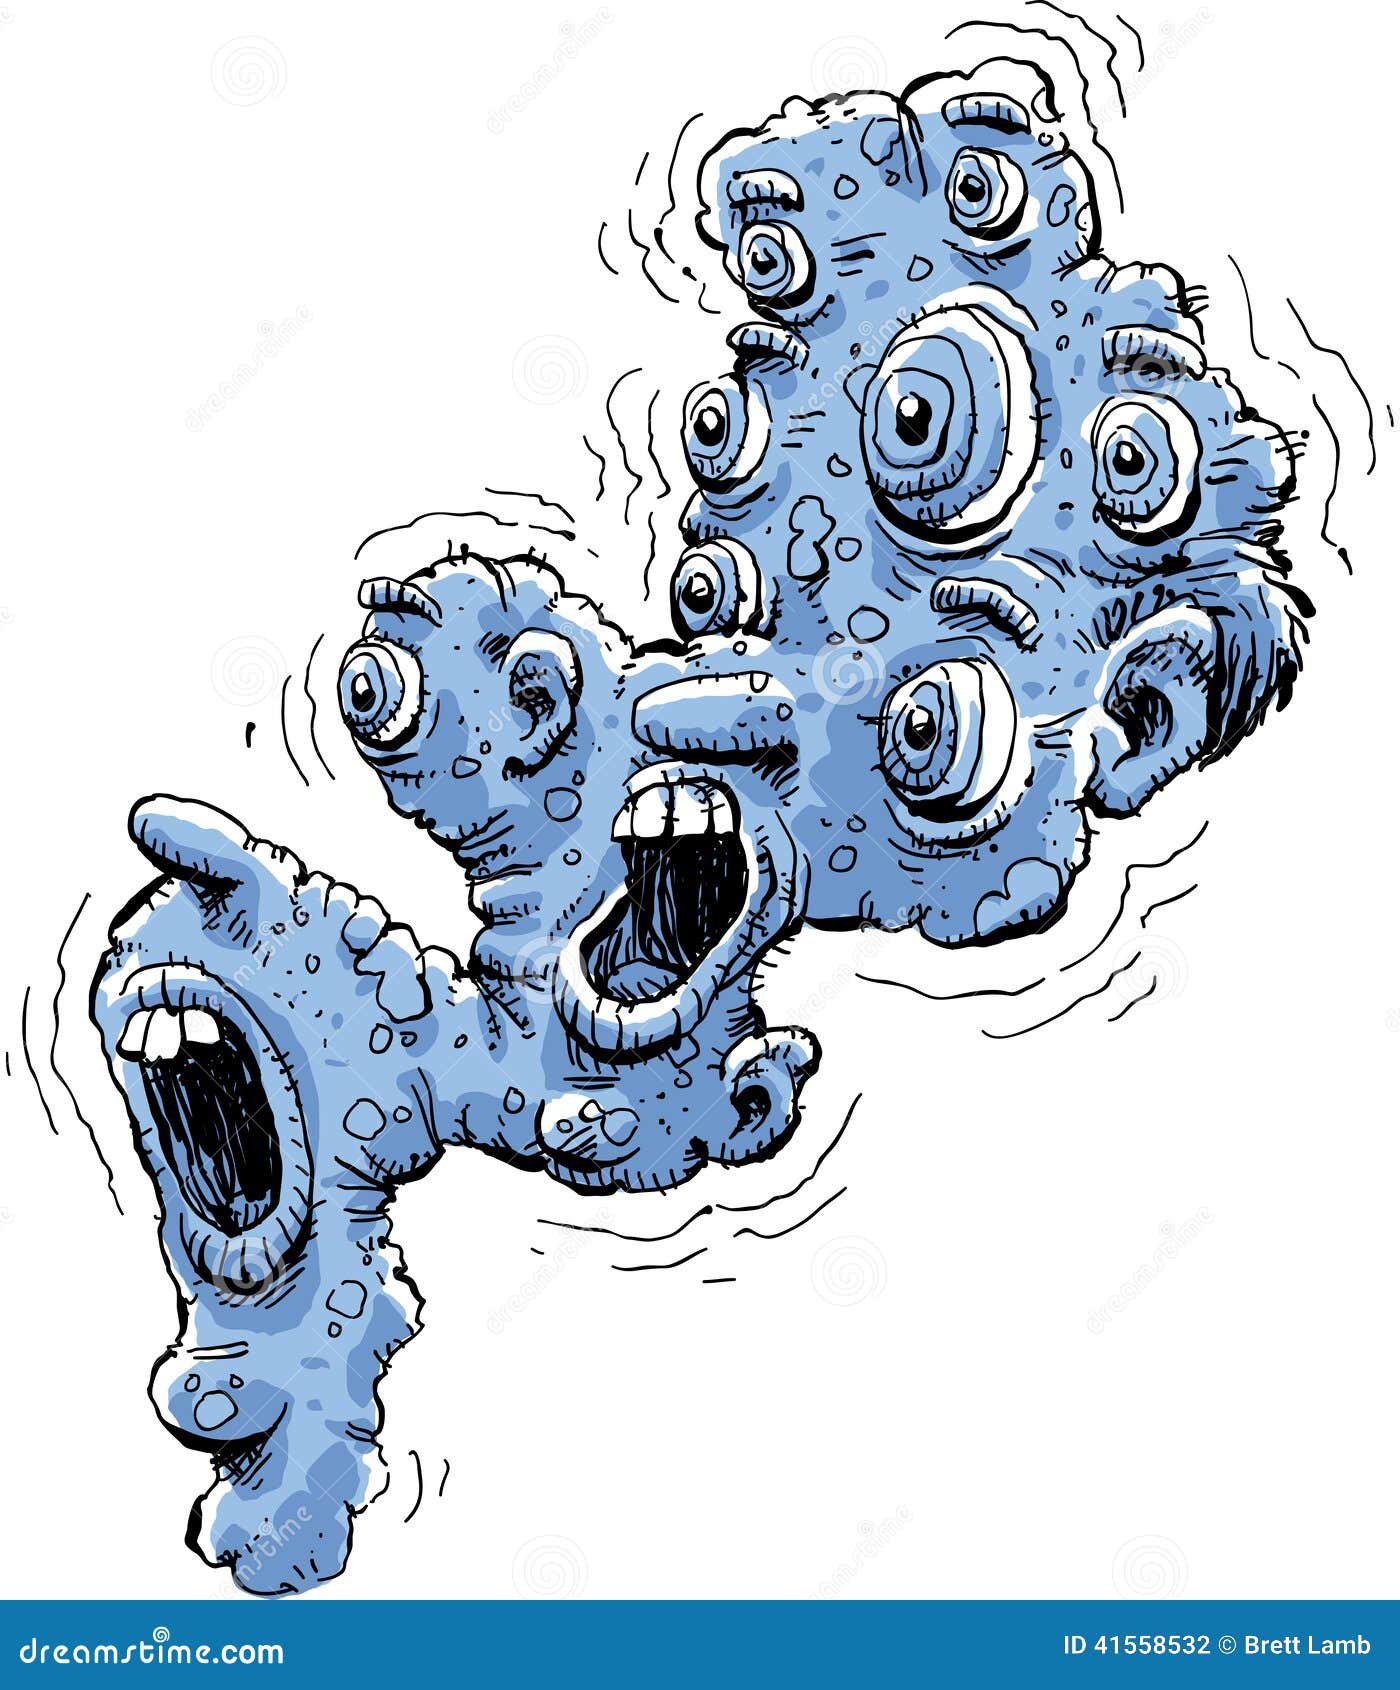 Fear Face stock illustration. Illustration of fear, panic - 41558532